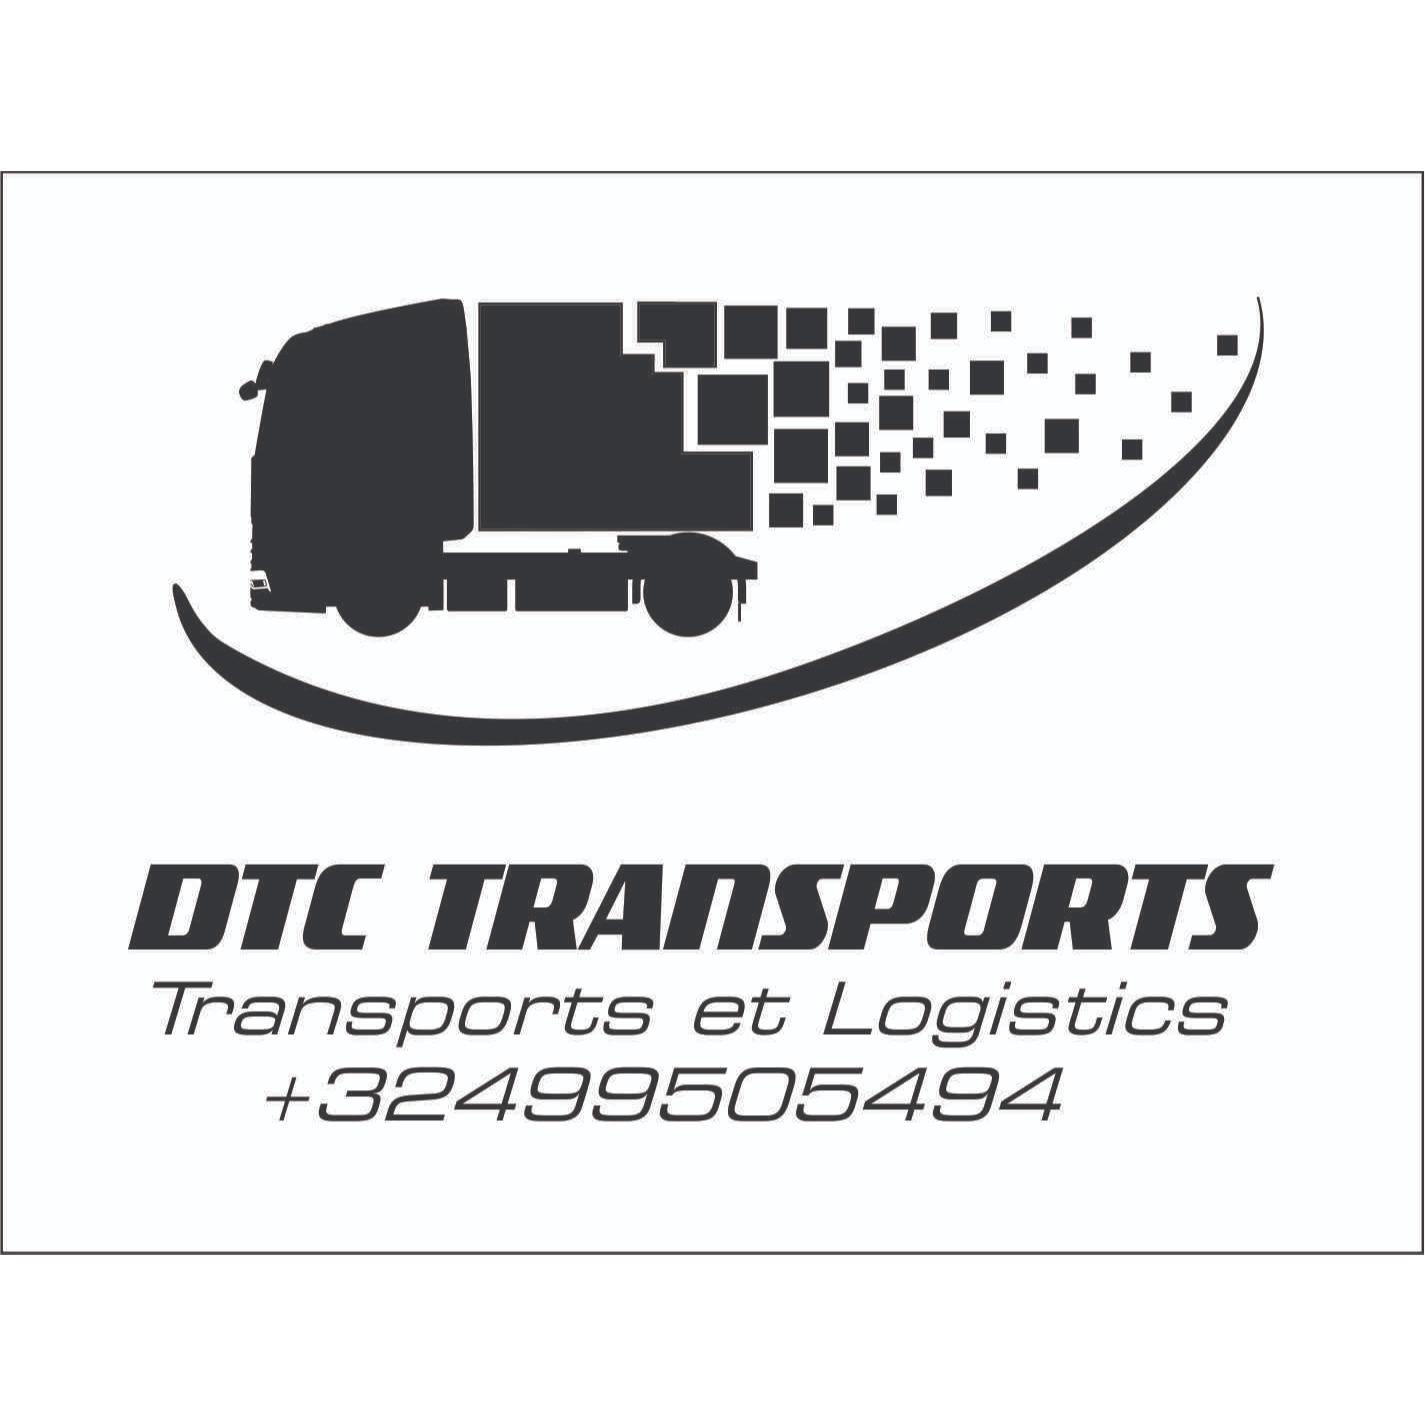 DTC transports